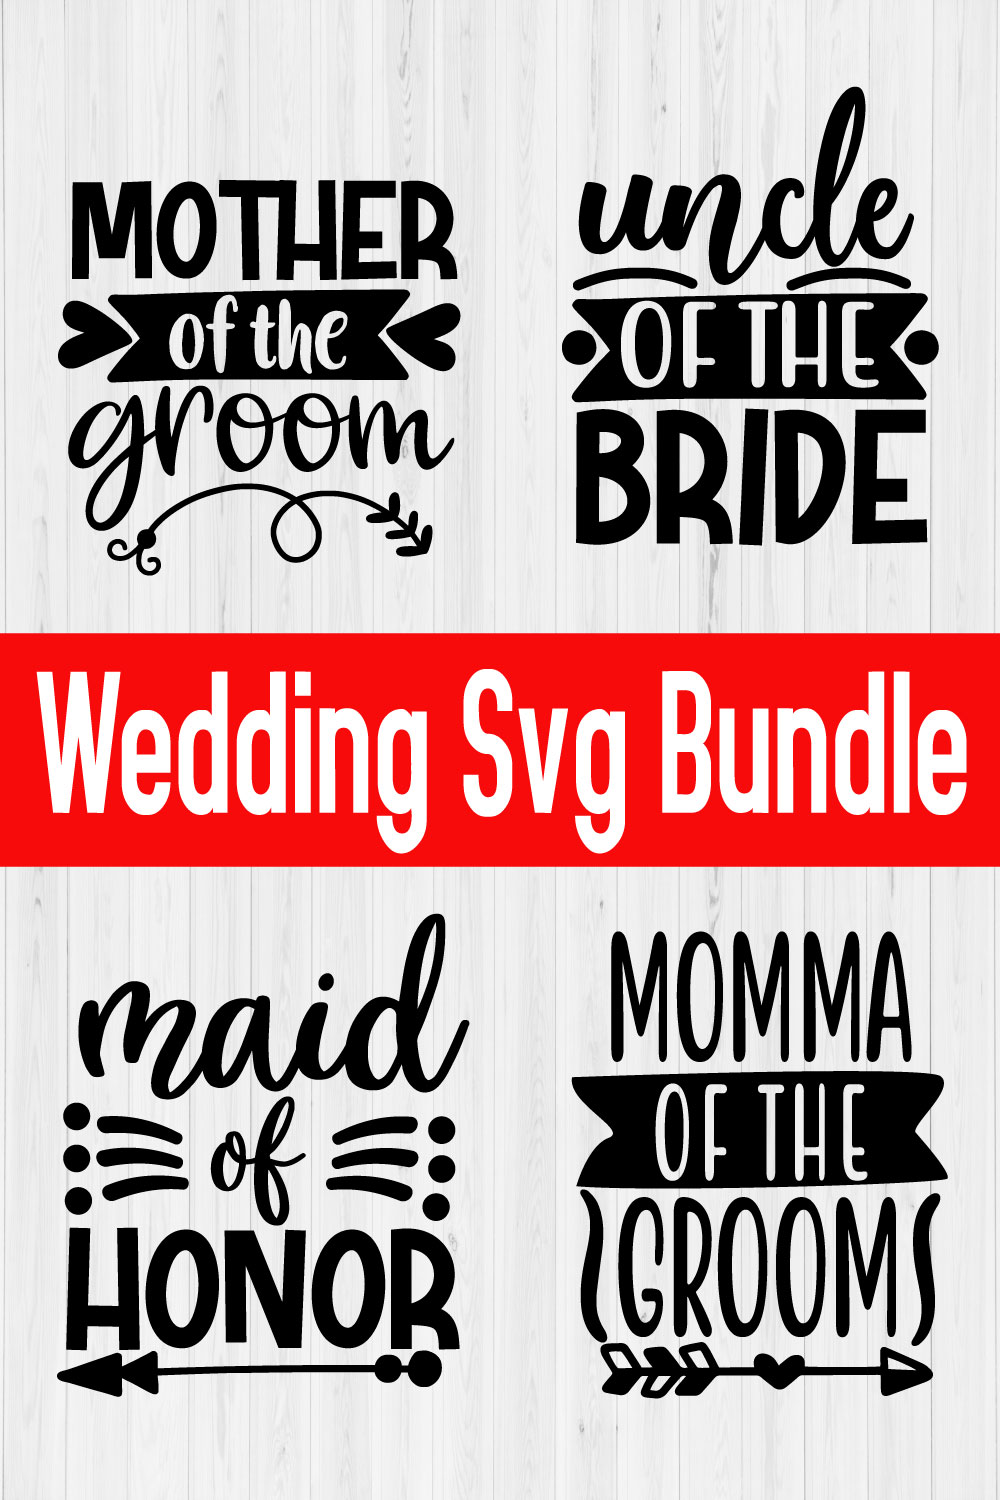 Wedding Svg Typography Designs Vol10 pinterest preview image.